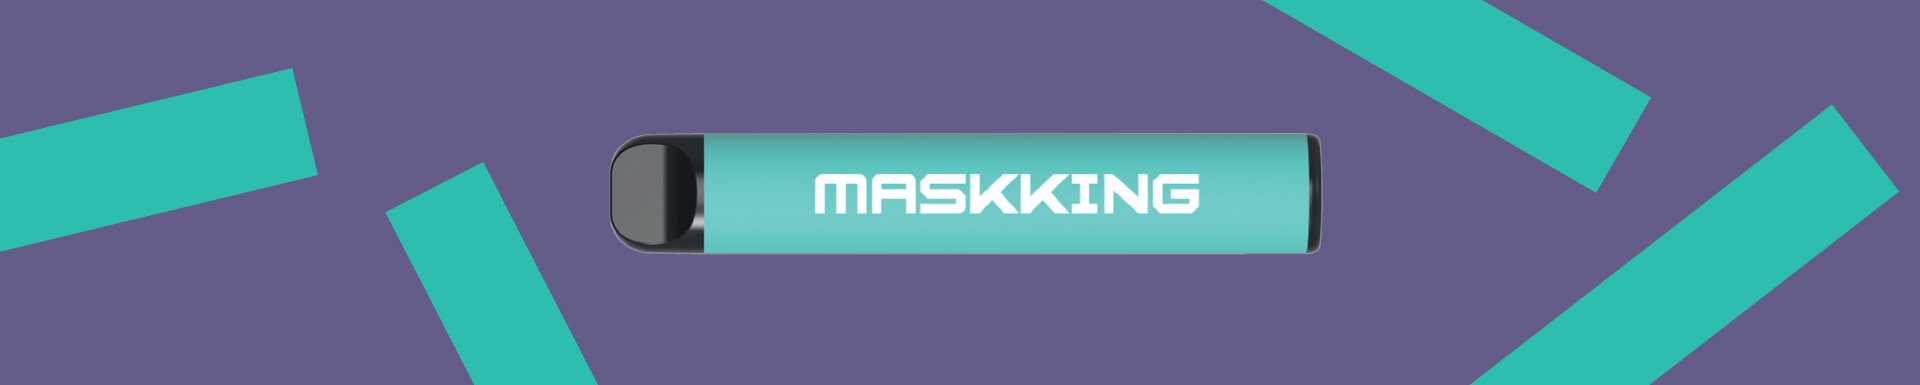 maskking product type